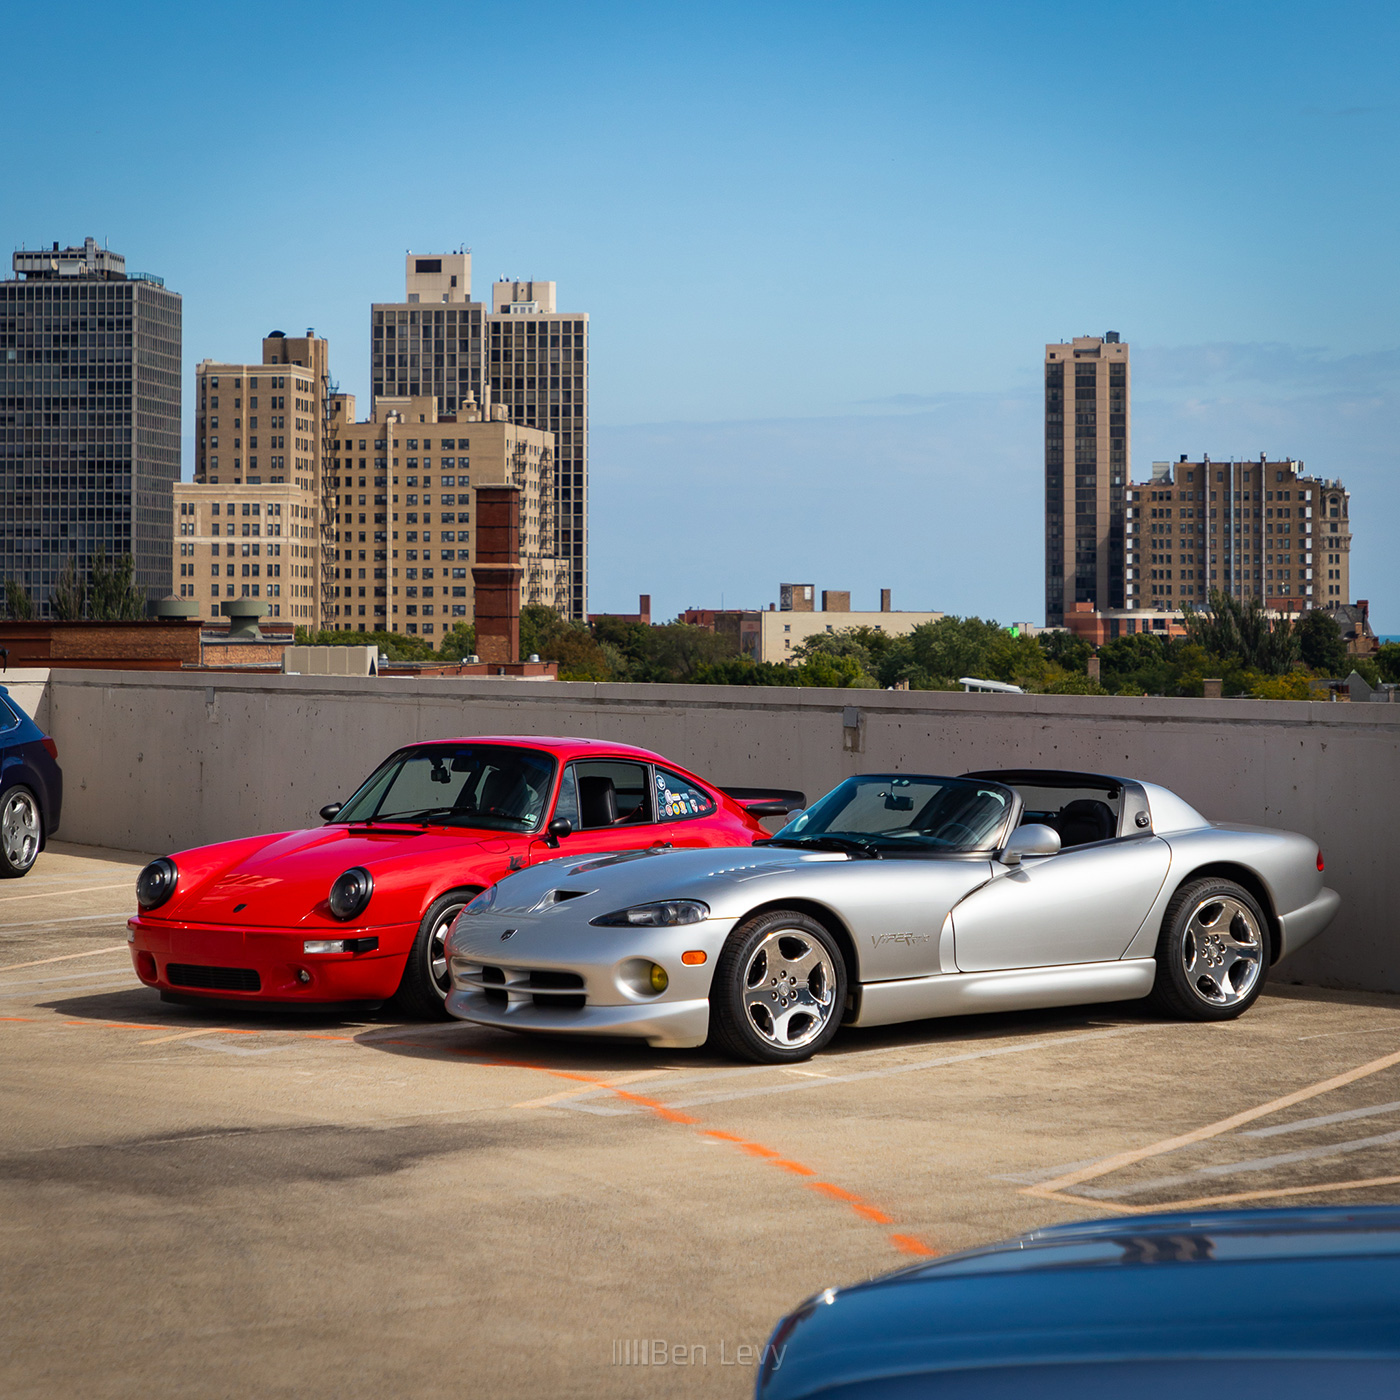 Red Porsche and Silver Viper in Chicago